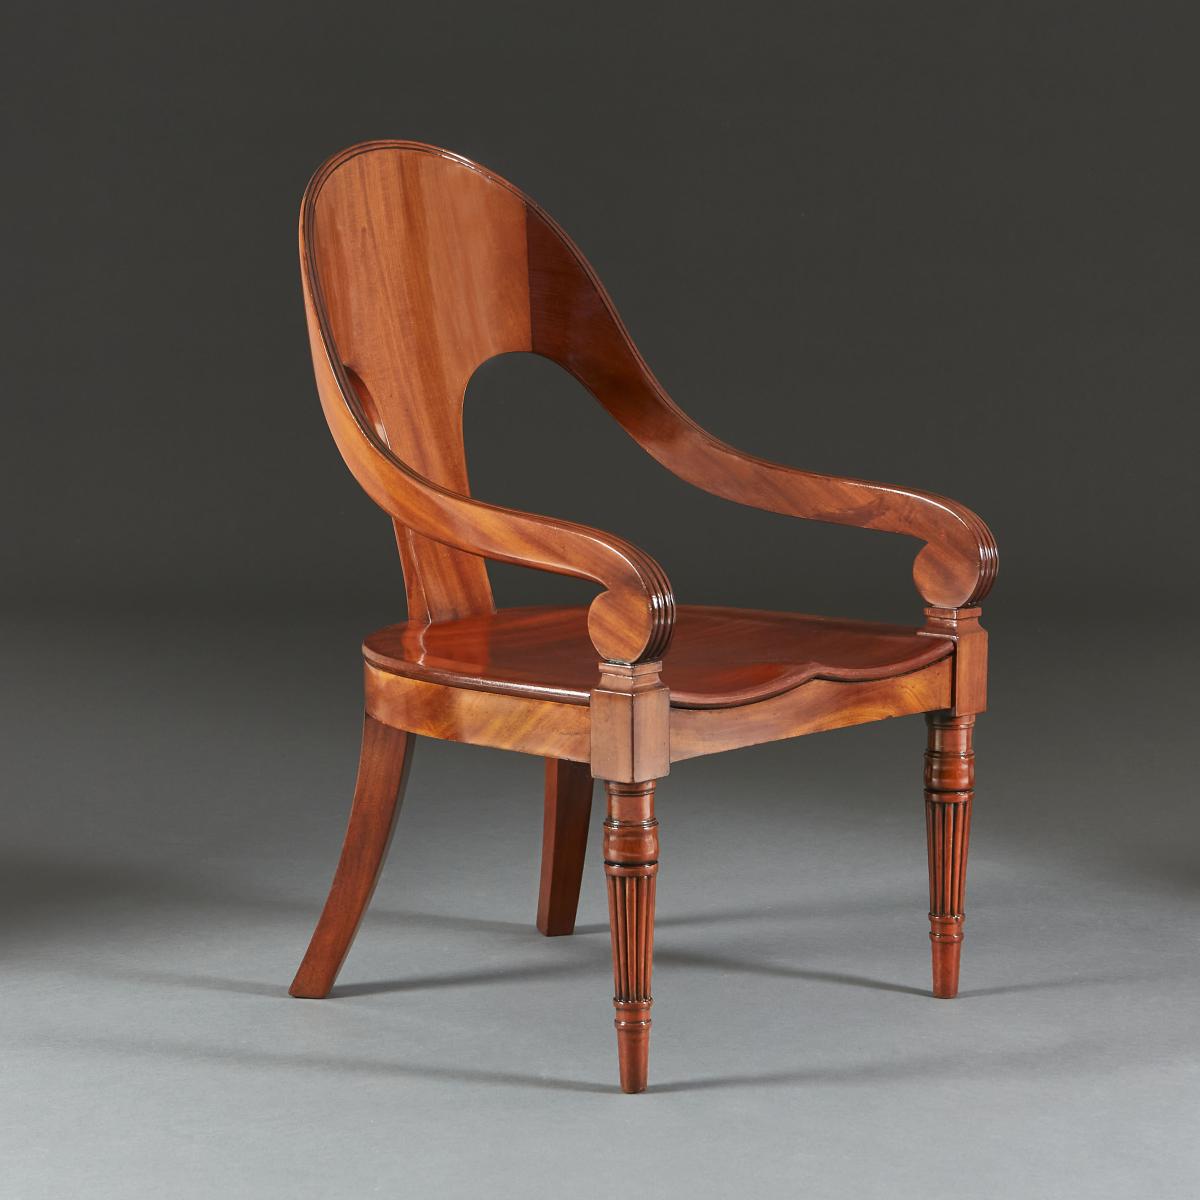 An Unusual Mahogany Klismos Chair